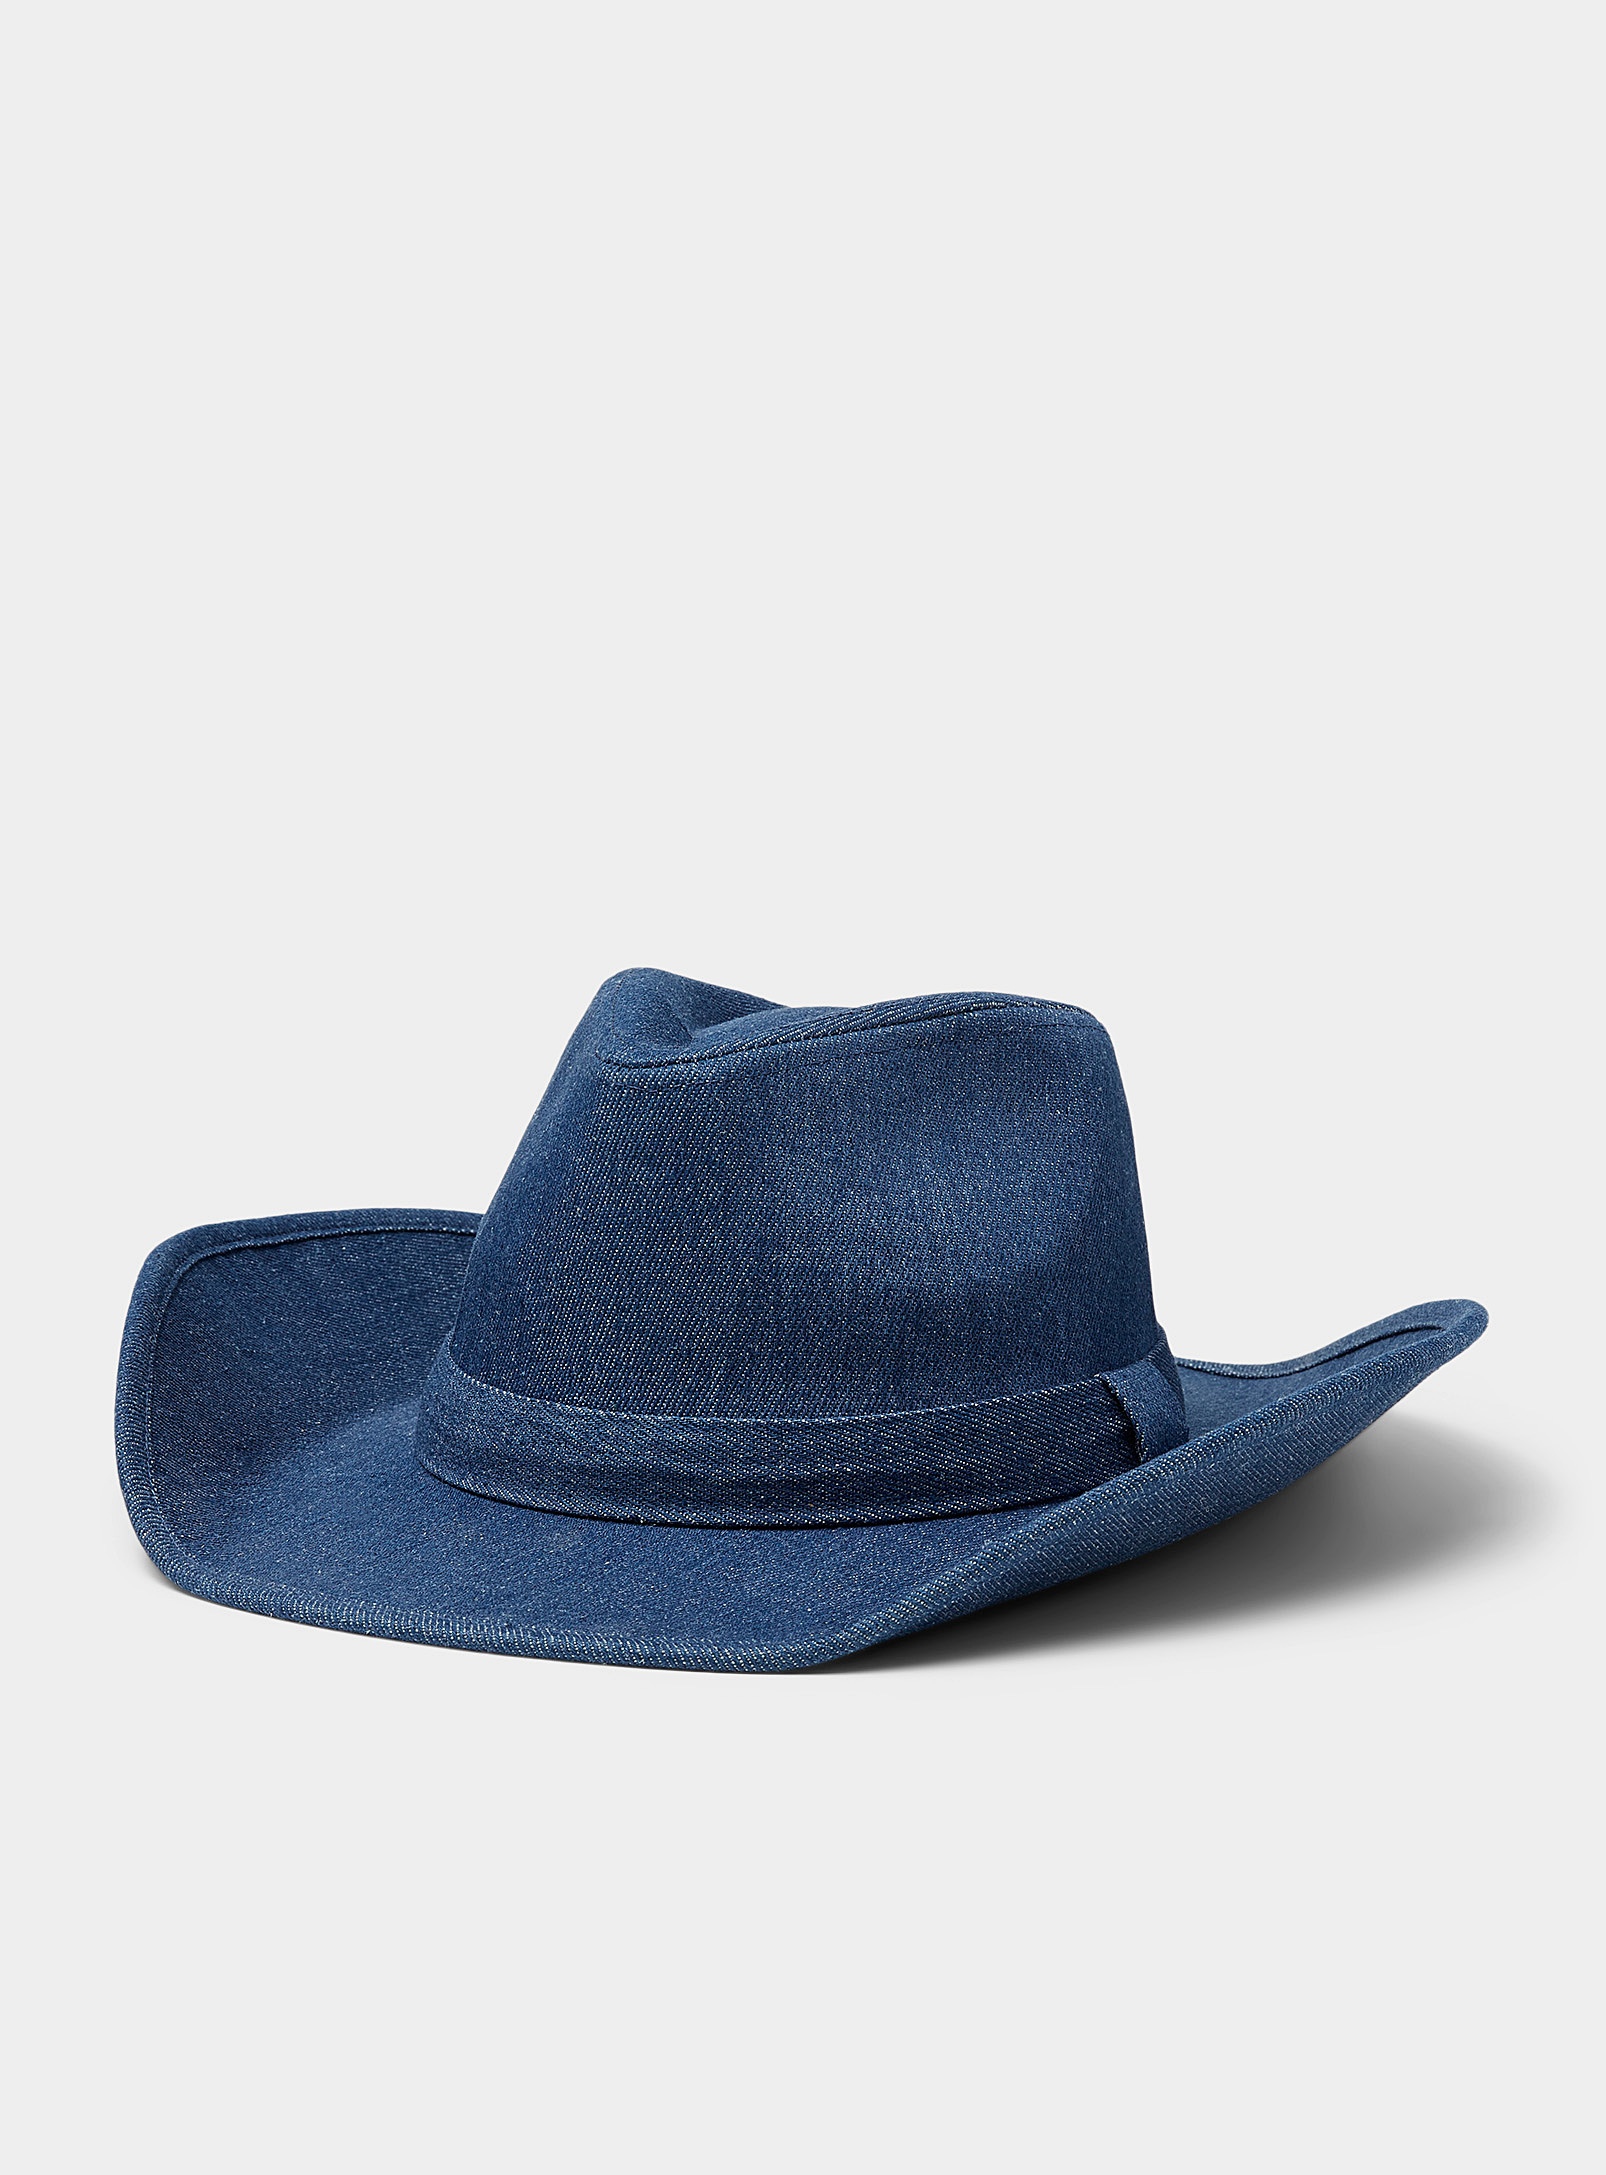 Simons - Women's Blue denim cowboy hat